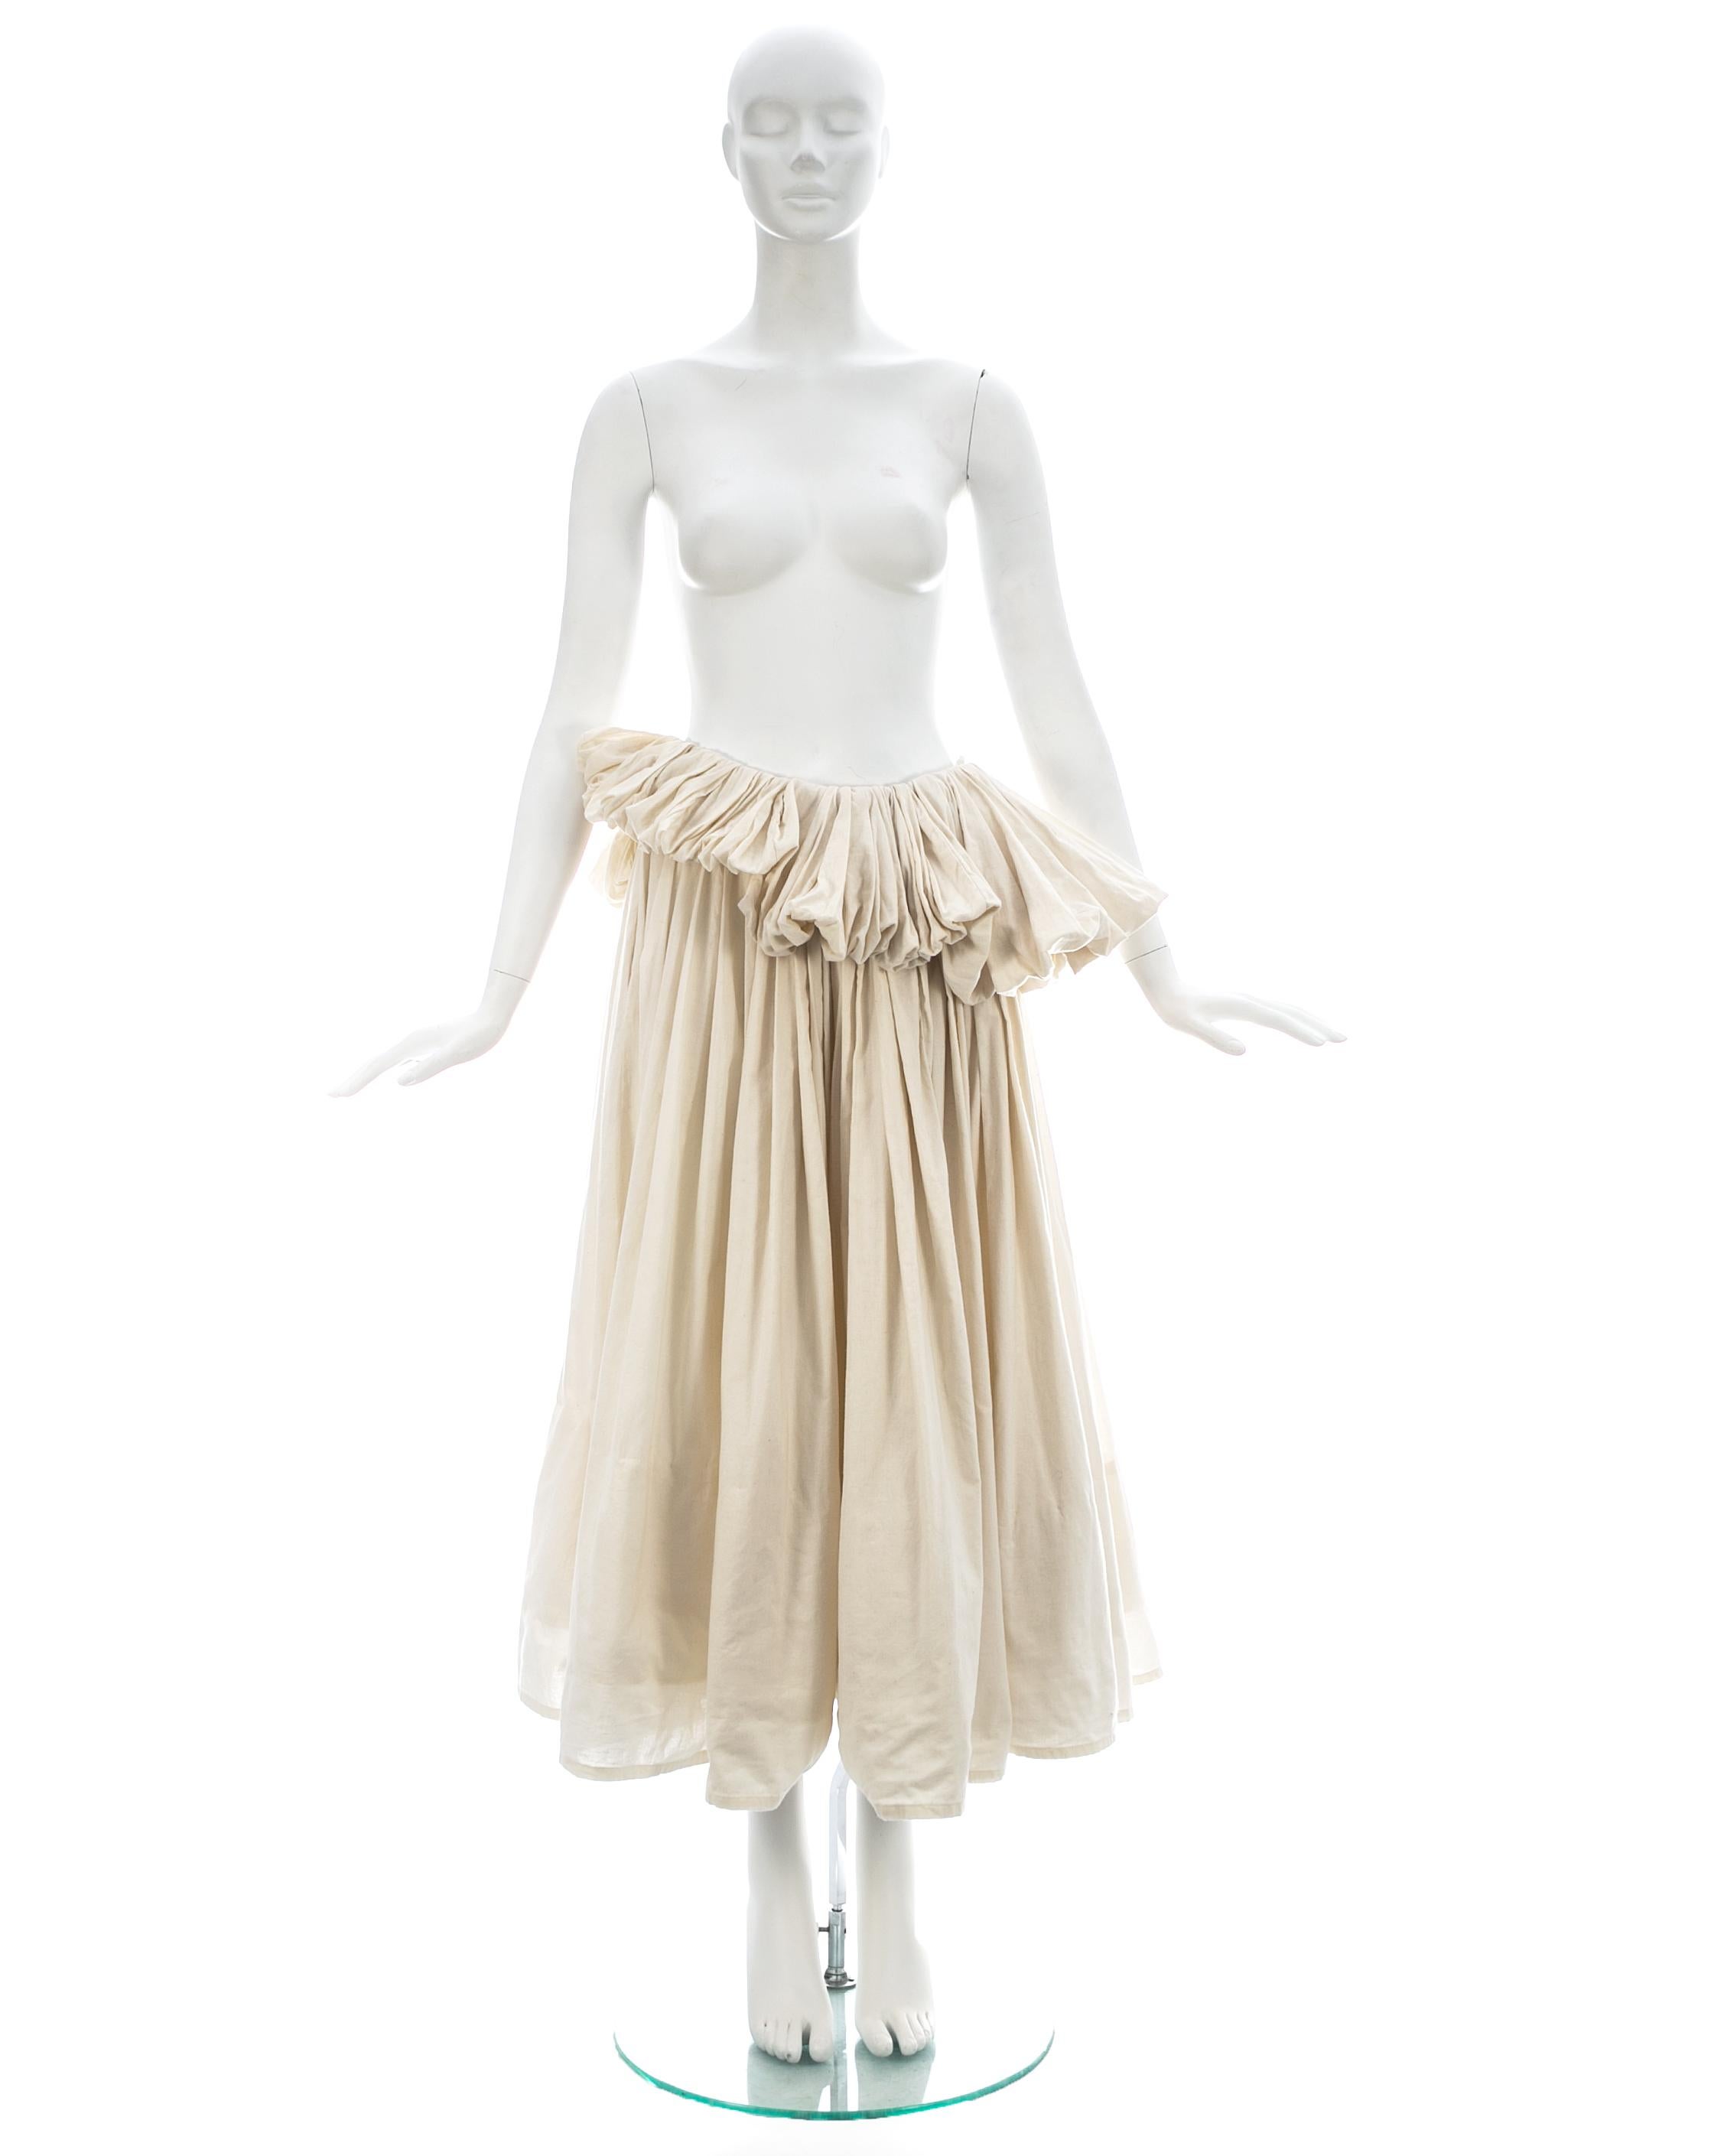 Yohji Yamamoto; Ivory cotton pleated peplum skirt with 2 side pockets, built-in padding at hem and elastic waistband 

Spring-Summer 2000